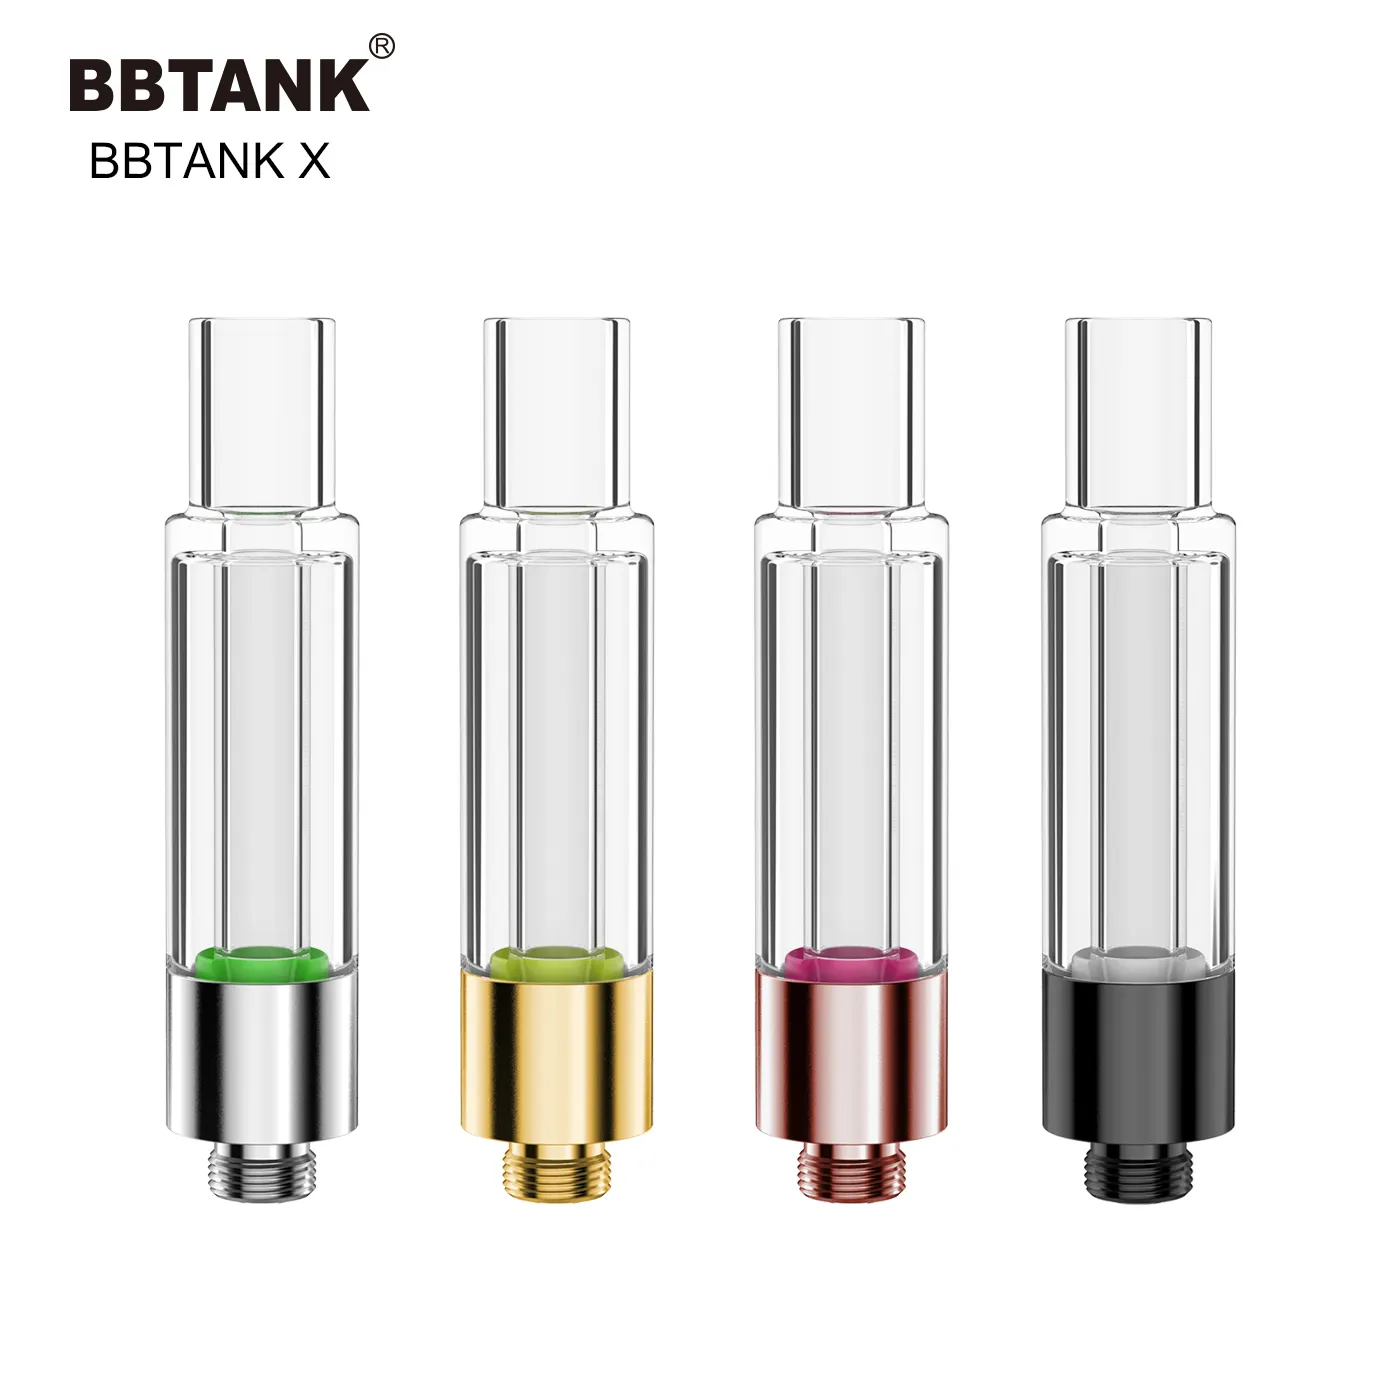 BBTANK X all glass cartridge cbd vape pen atomizer 0.5ml / 1.0ml tank ceramic coil 510 thread vaporizer